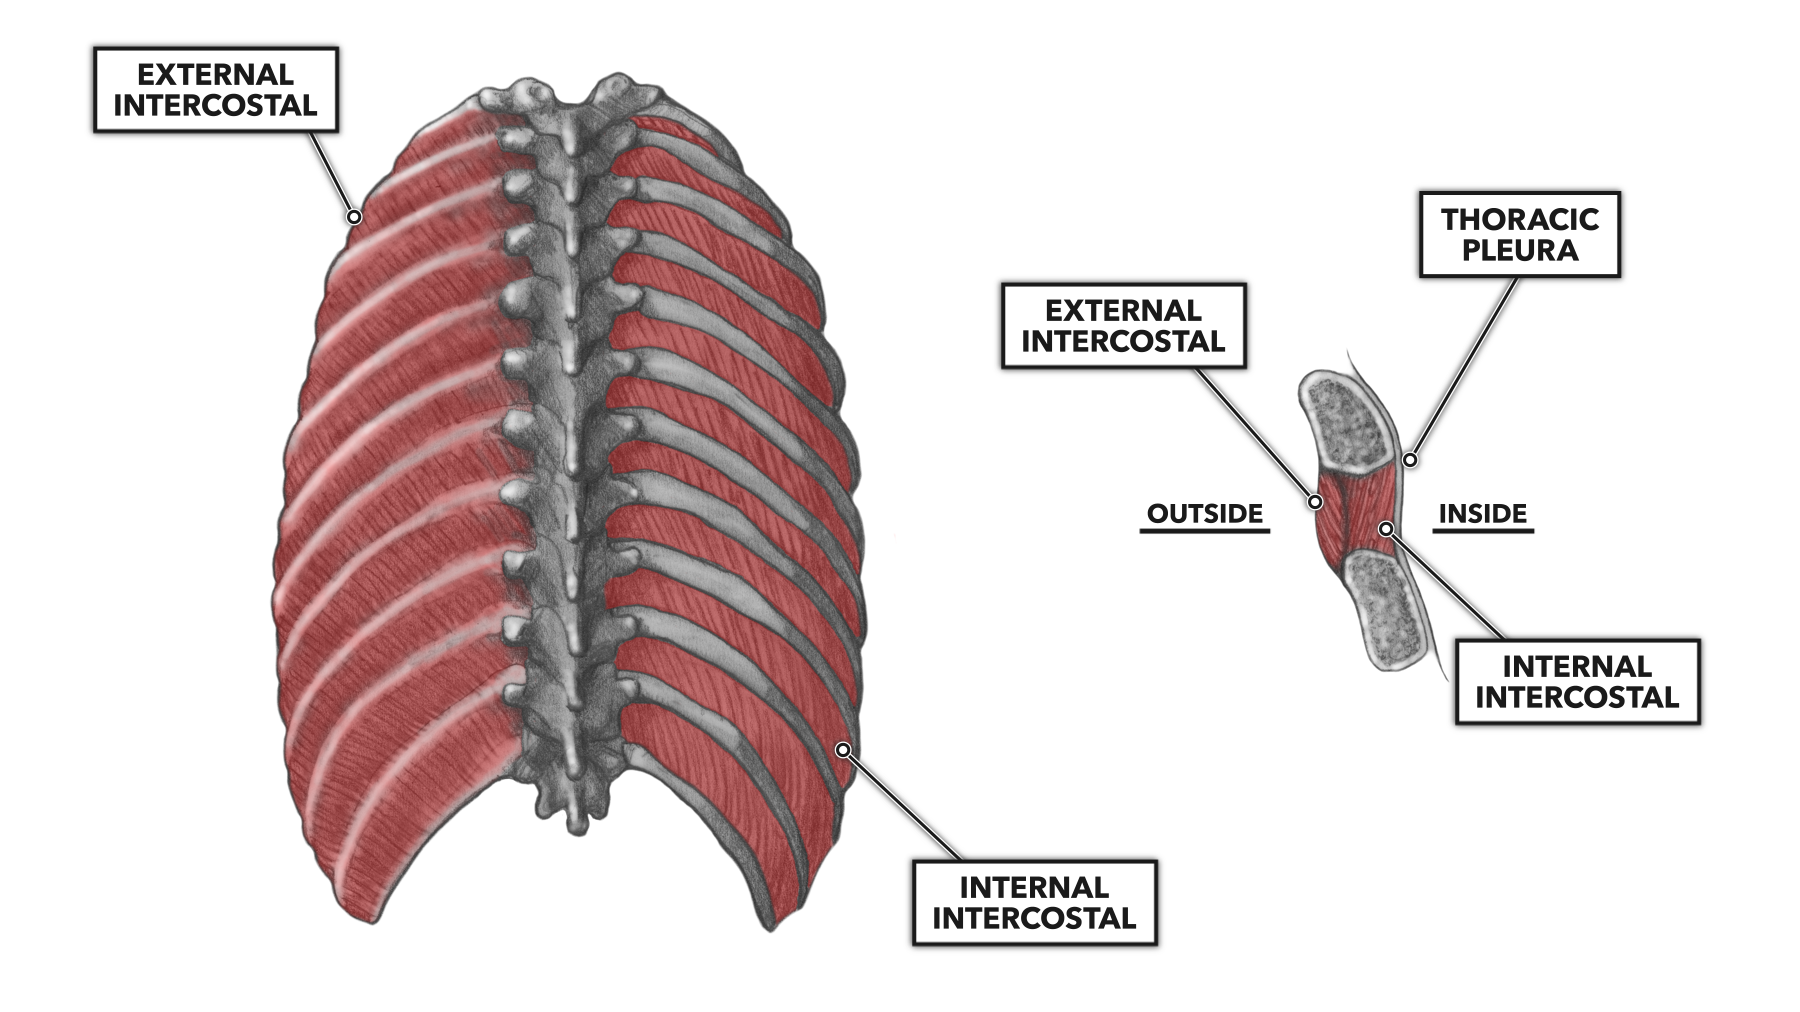 intercoastal muscles